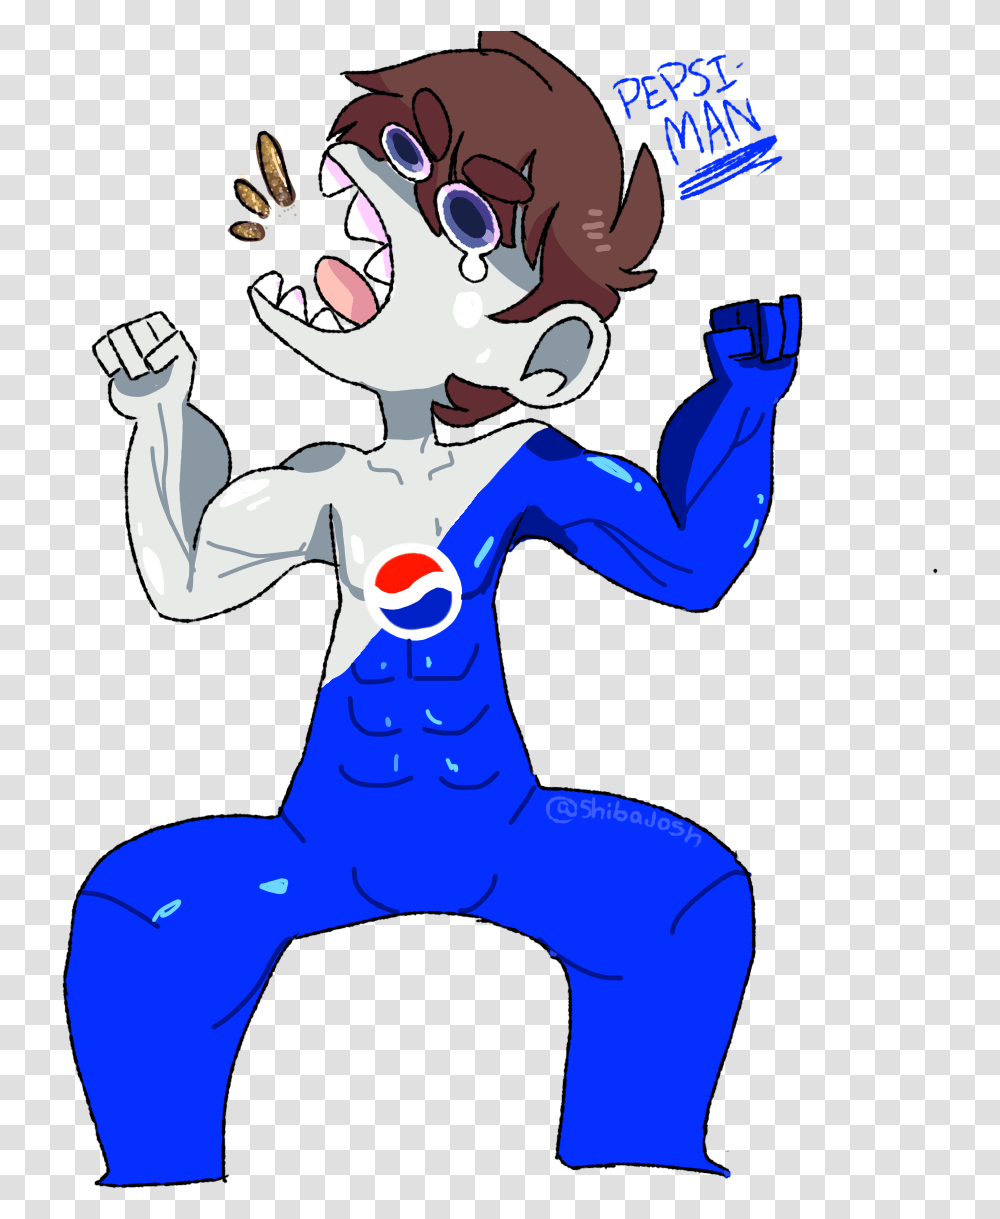 Rubberninja Loves Pepsi Cartoon, Person, Human, Performer, Hand Transparent Png